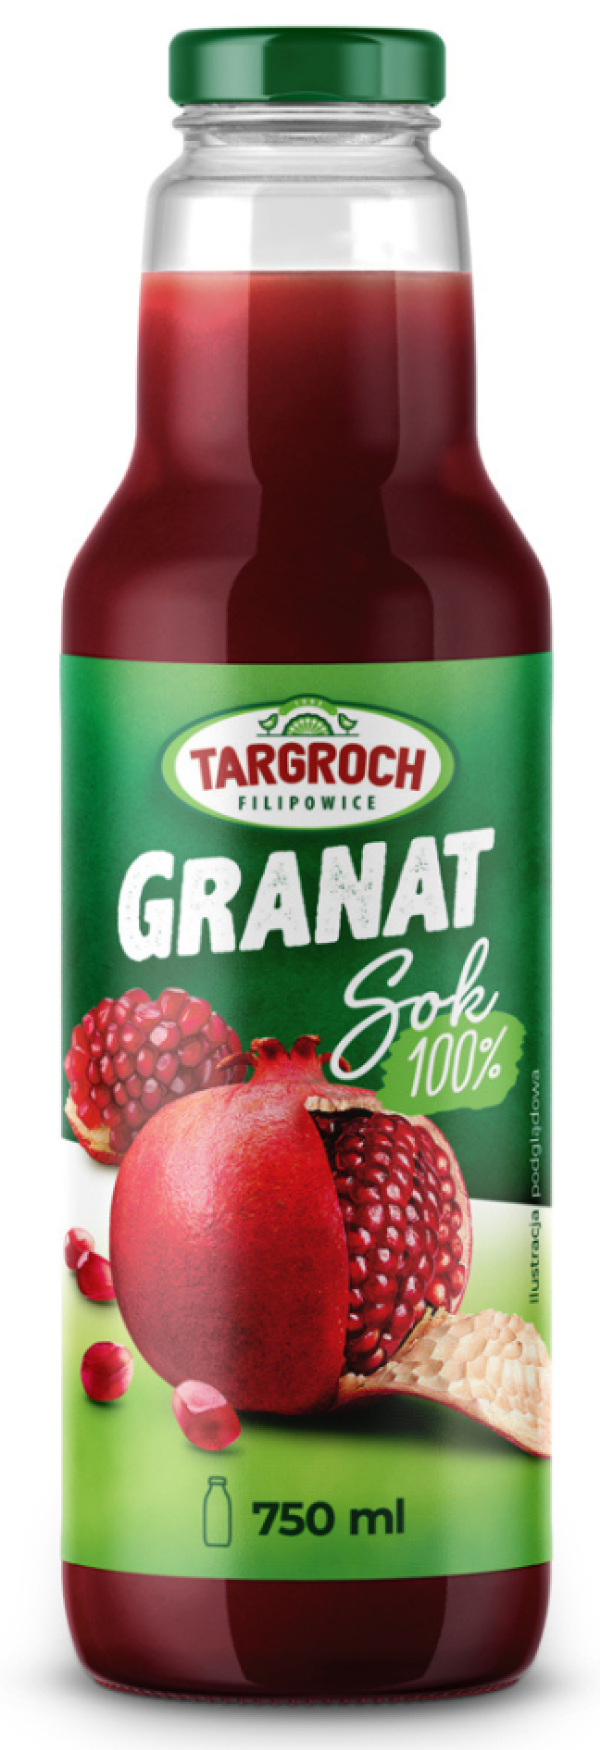 Sok z granatu 100% naturalny Bez Cukru 750 ml Targroch Granat